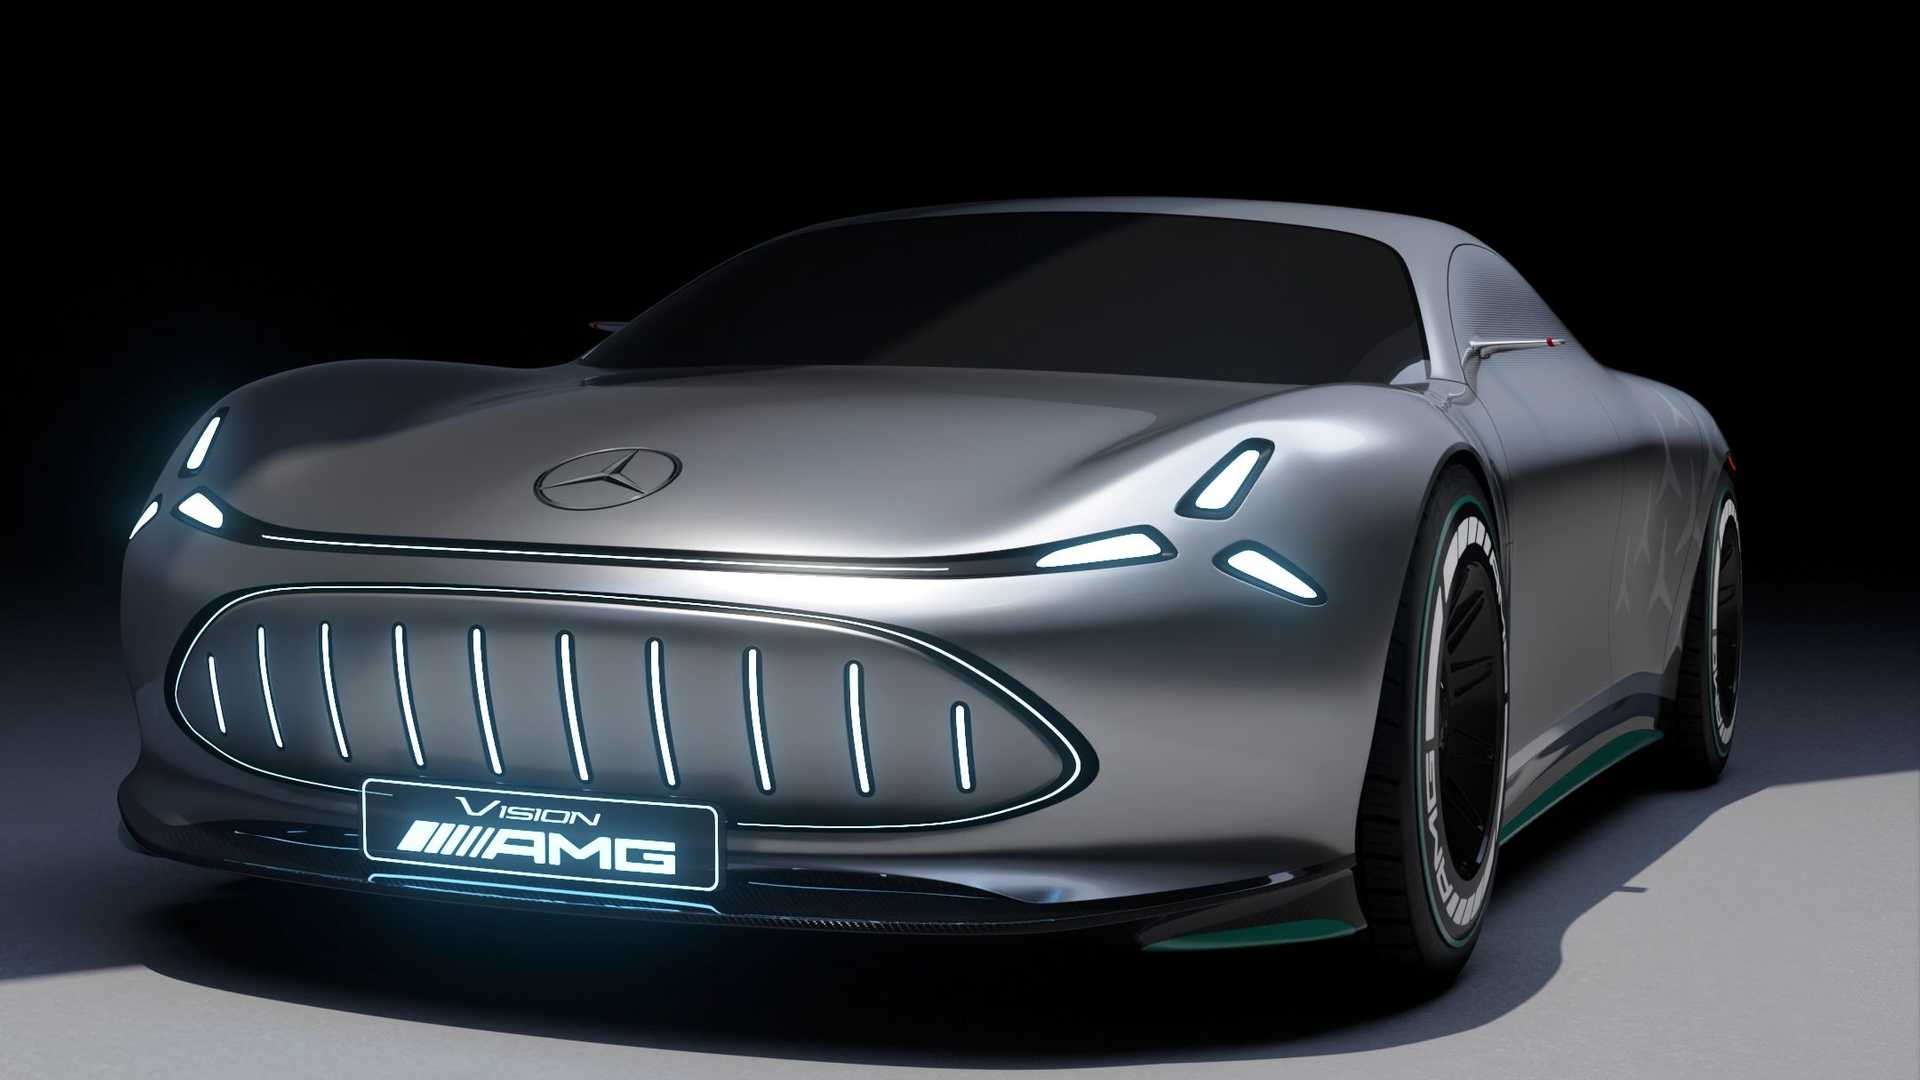 Supercar Listrik Penuh Mercedes-AMG Vision AMG Concept